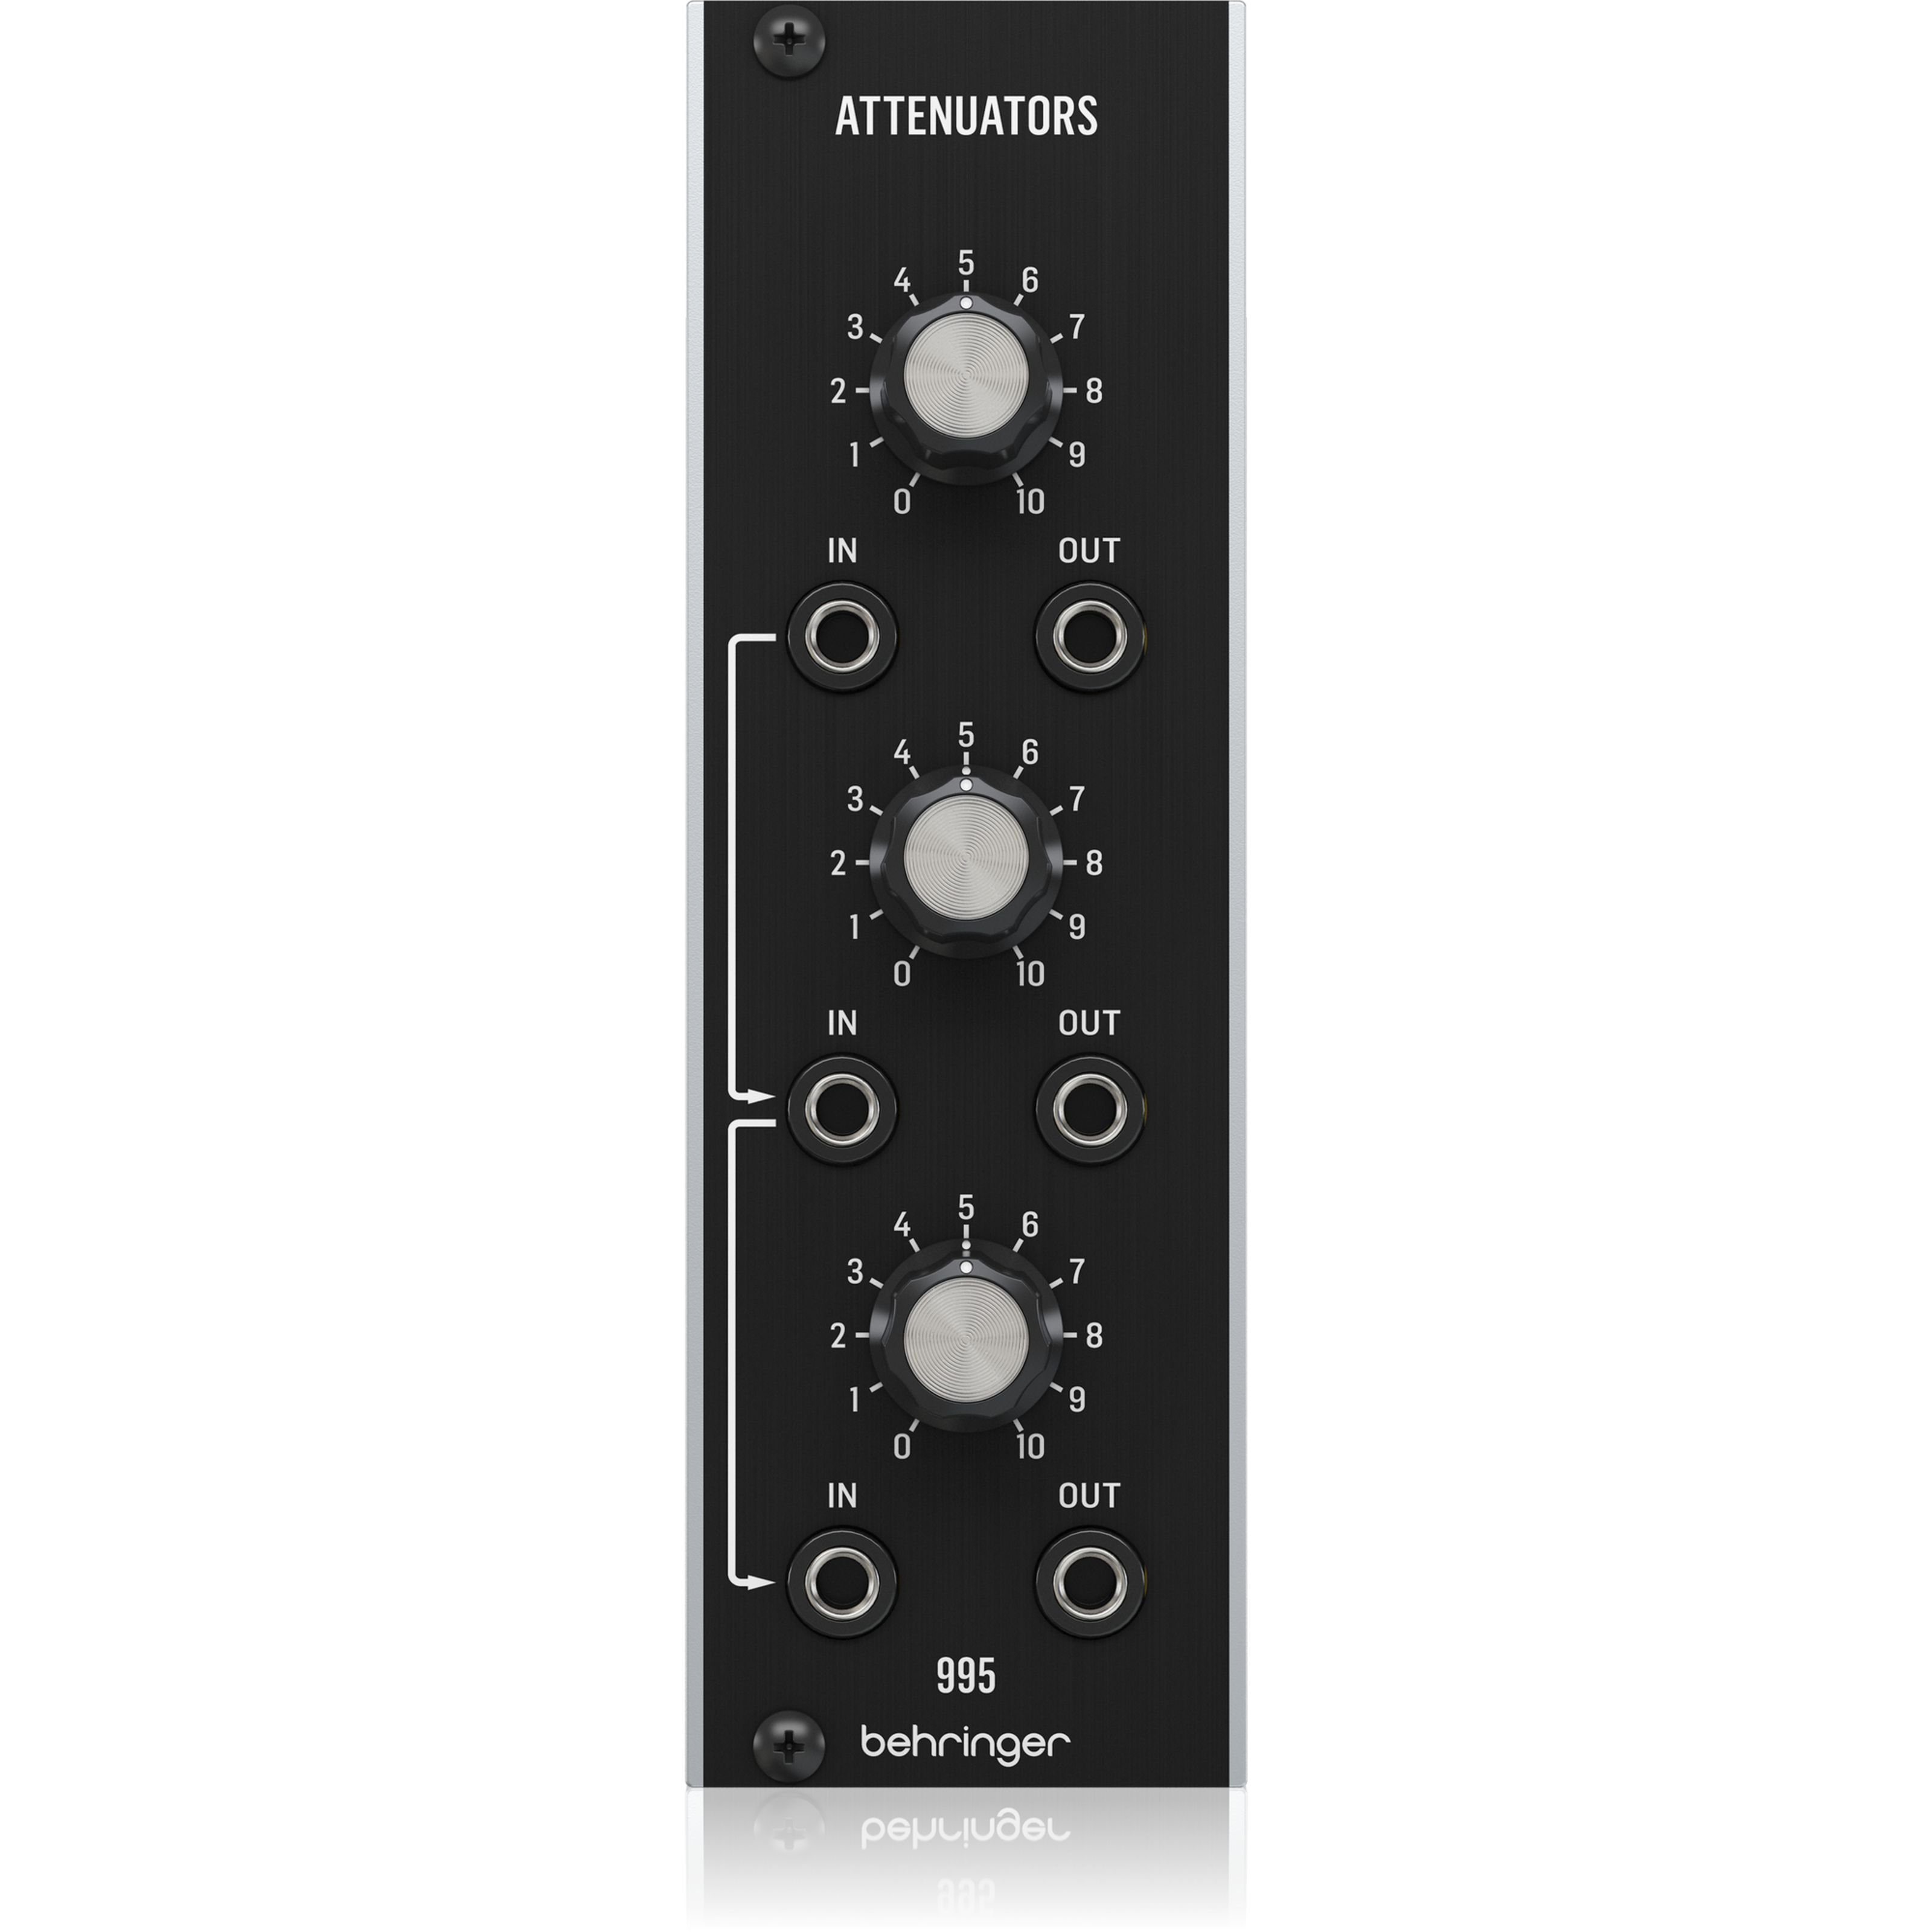 Behringer Synthesizer (995 Attenuators), 995 Attenuators - Attenuator Modular Synthesizer